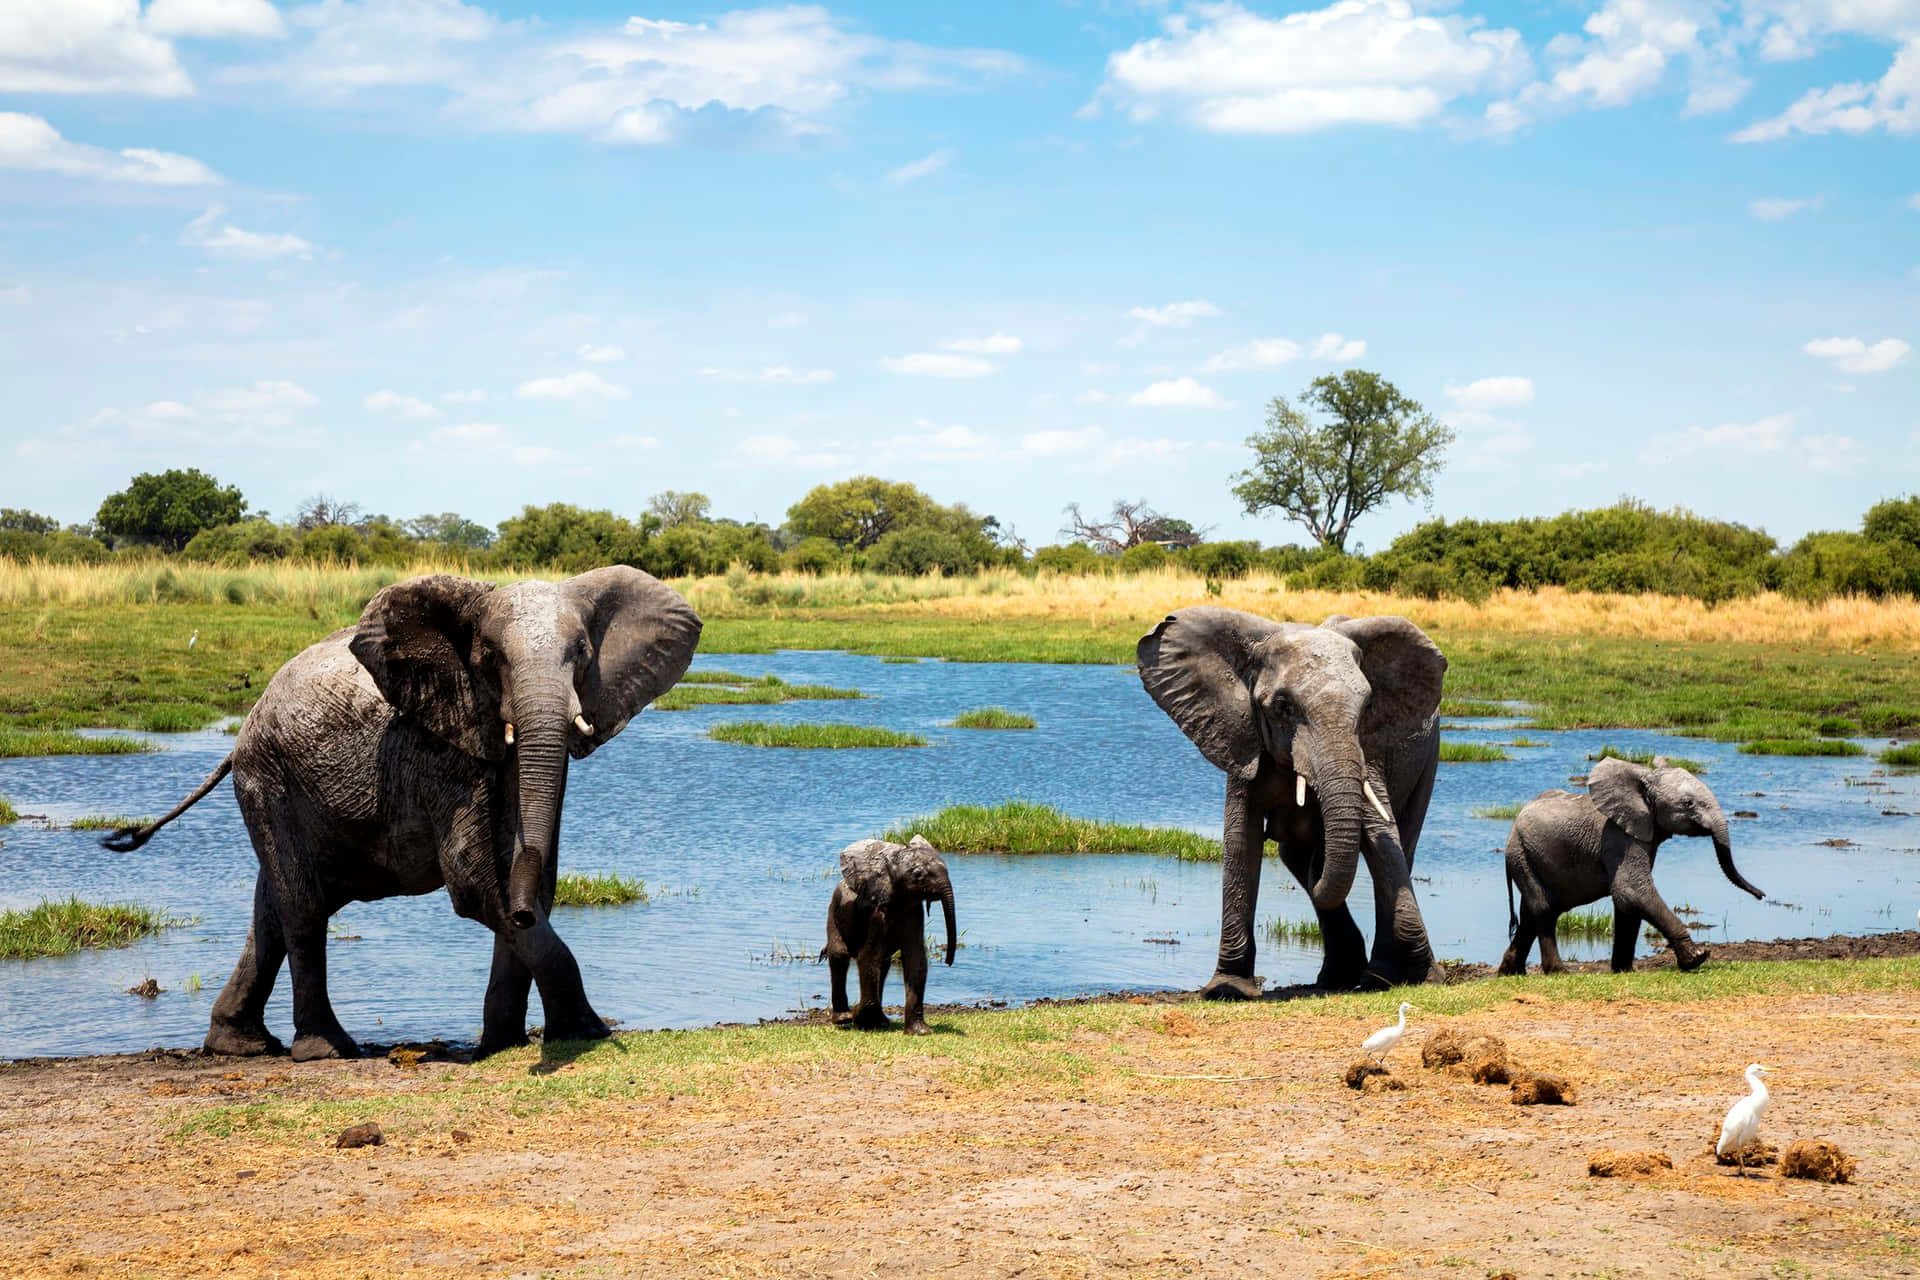 Safari Elephants River Africa Wildlife Picture